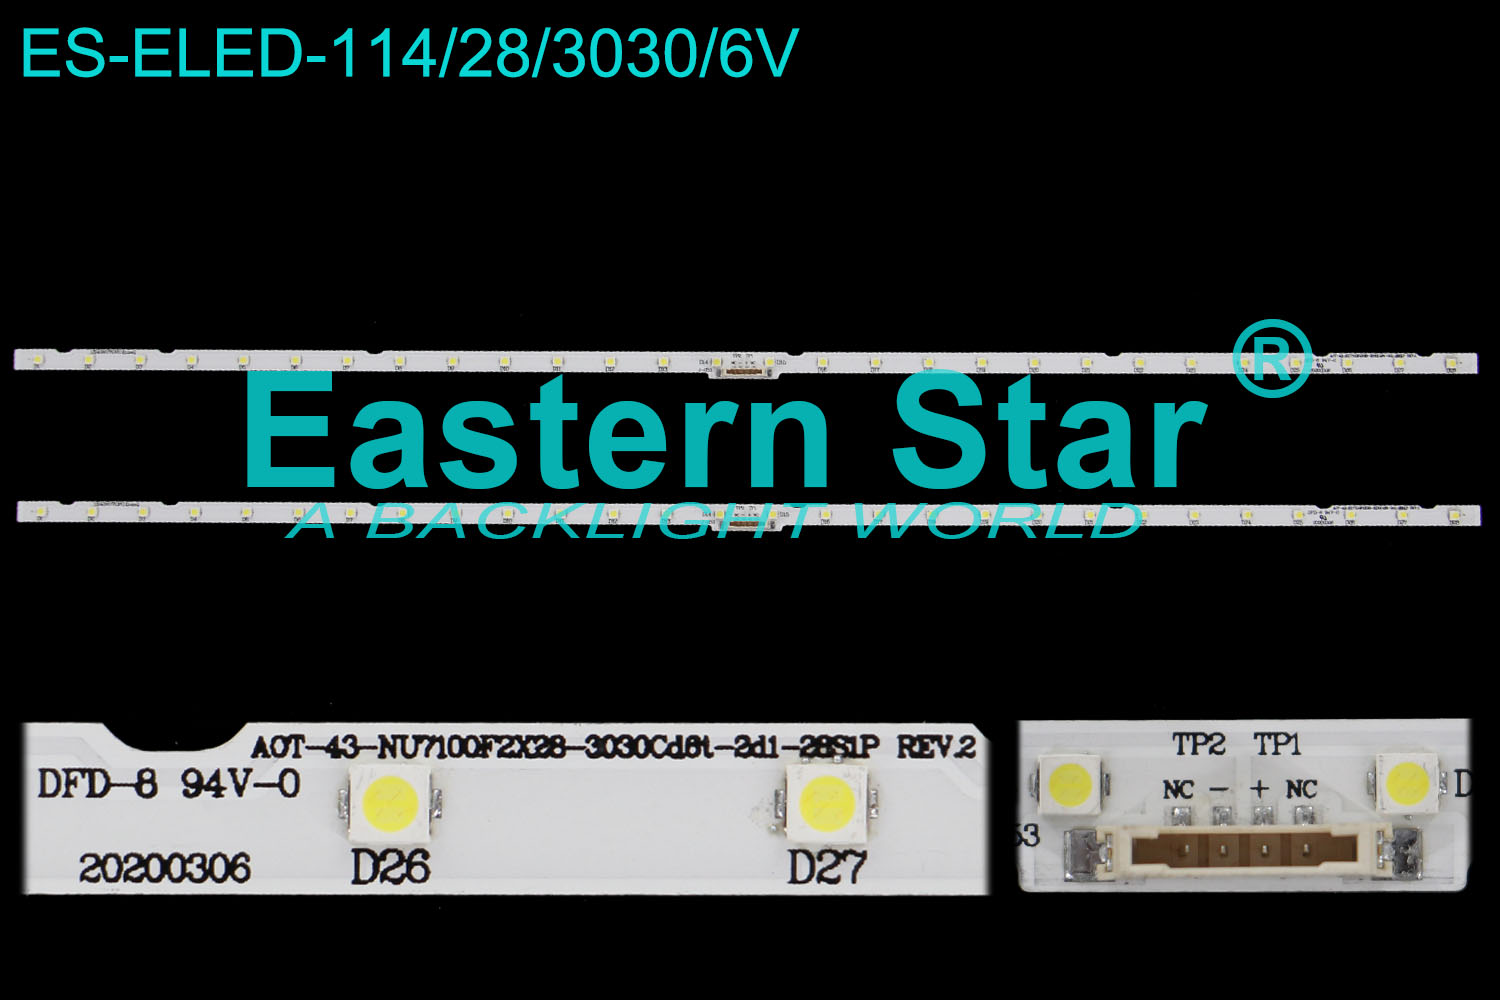 ES-ELED-114 ELED/EDGE TV backlight use for Samsung  43'' 28LEDs AOT-43-NU7100F2X28-3030Cd6t-2d1-28S1P  REV.2 DFD-8  94V-0  20200306 LED STRIPS(2)